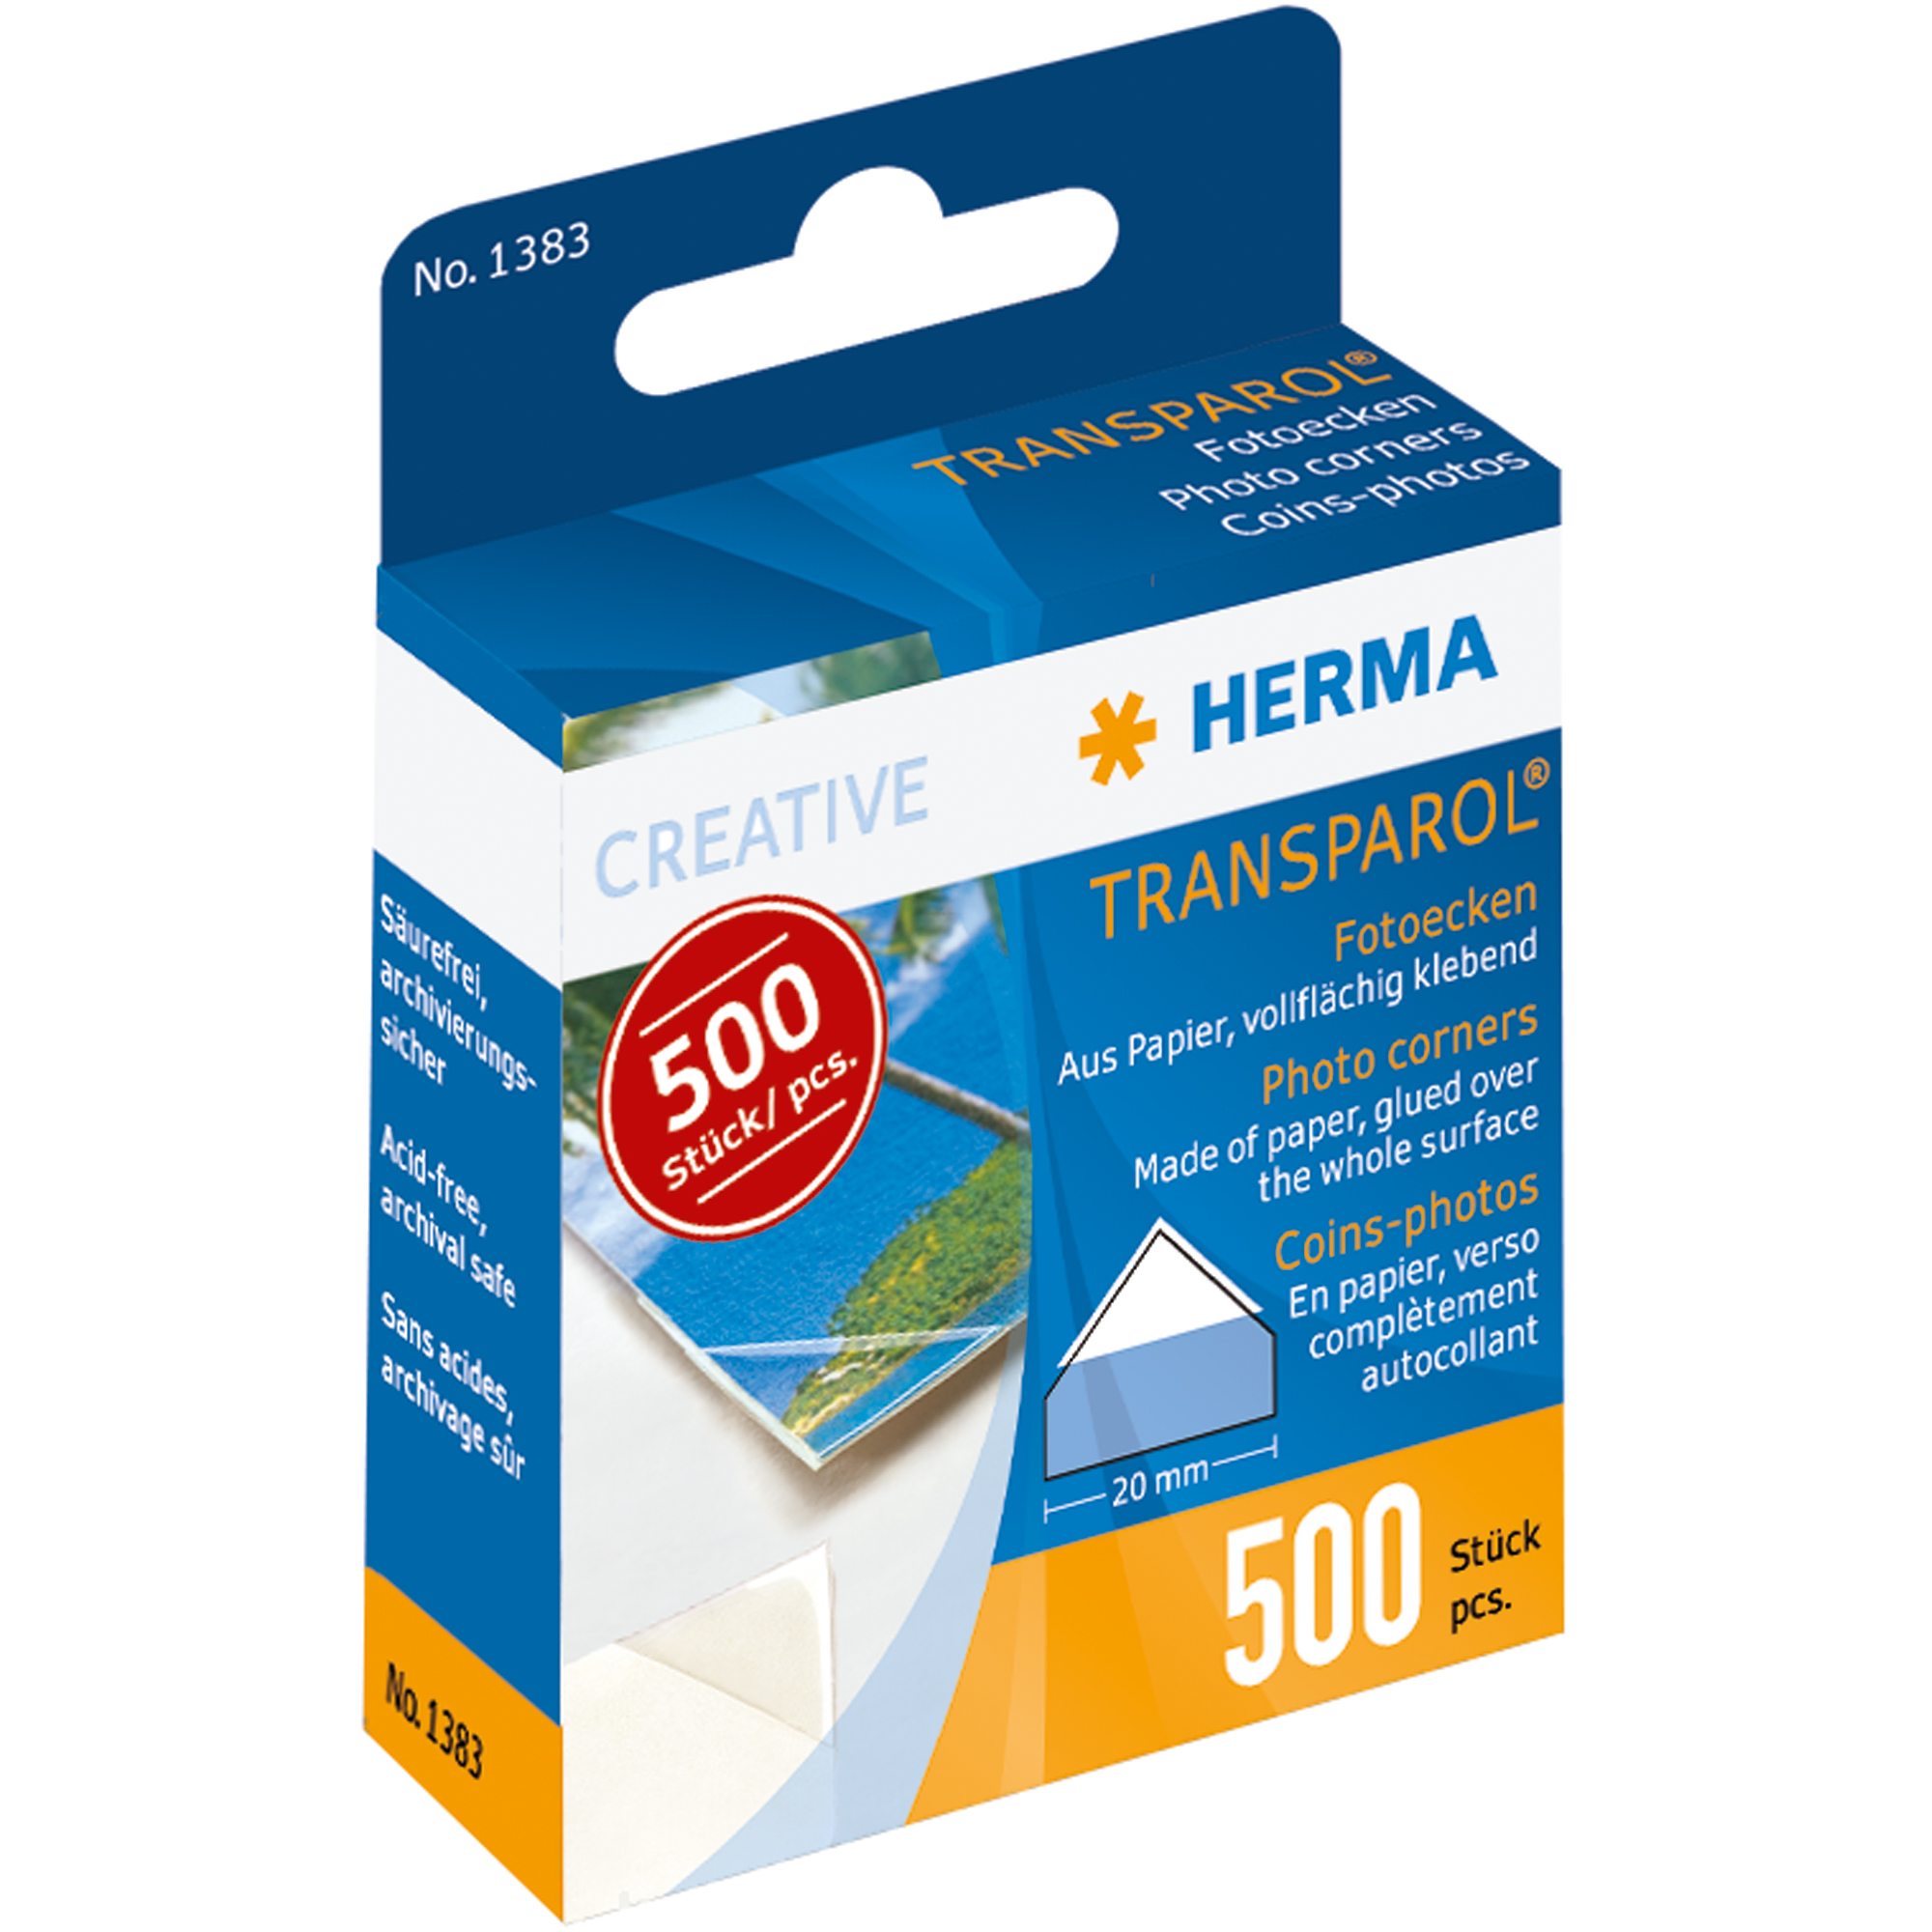 HERMA Fotoecke Transparol 500 St./Pack.